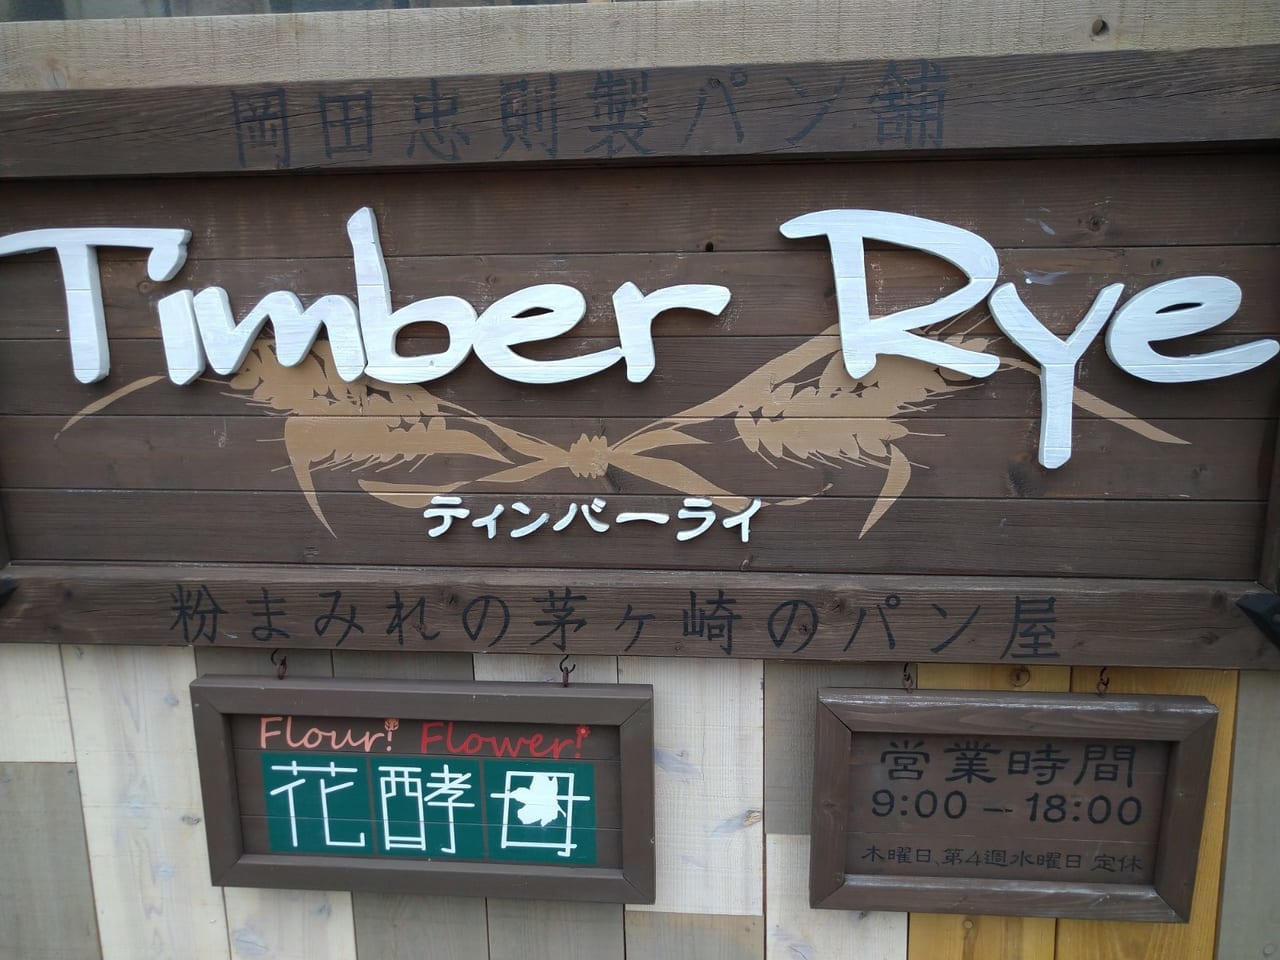 Timber Rye